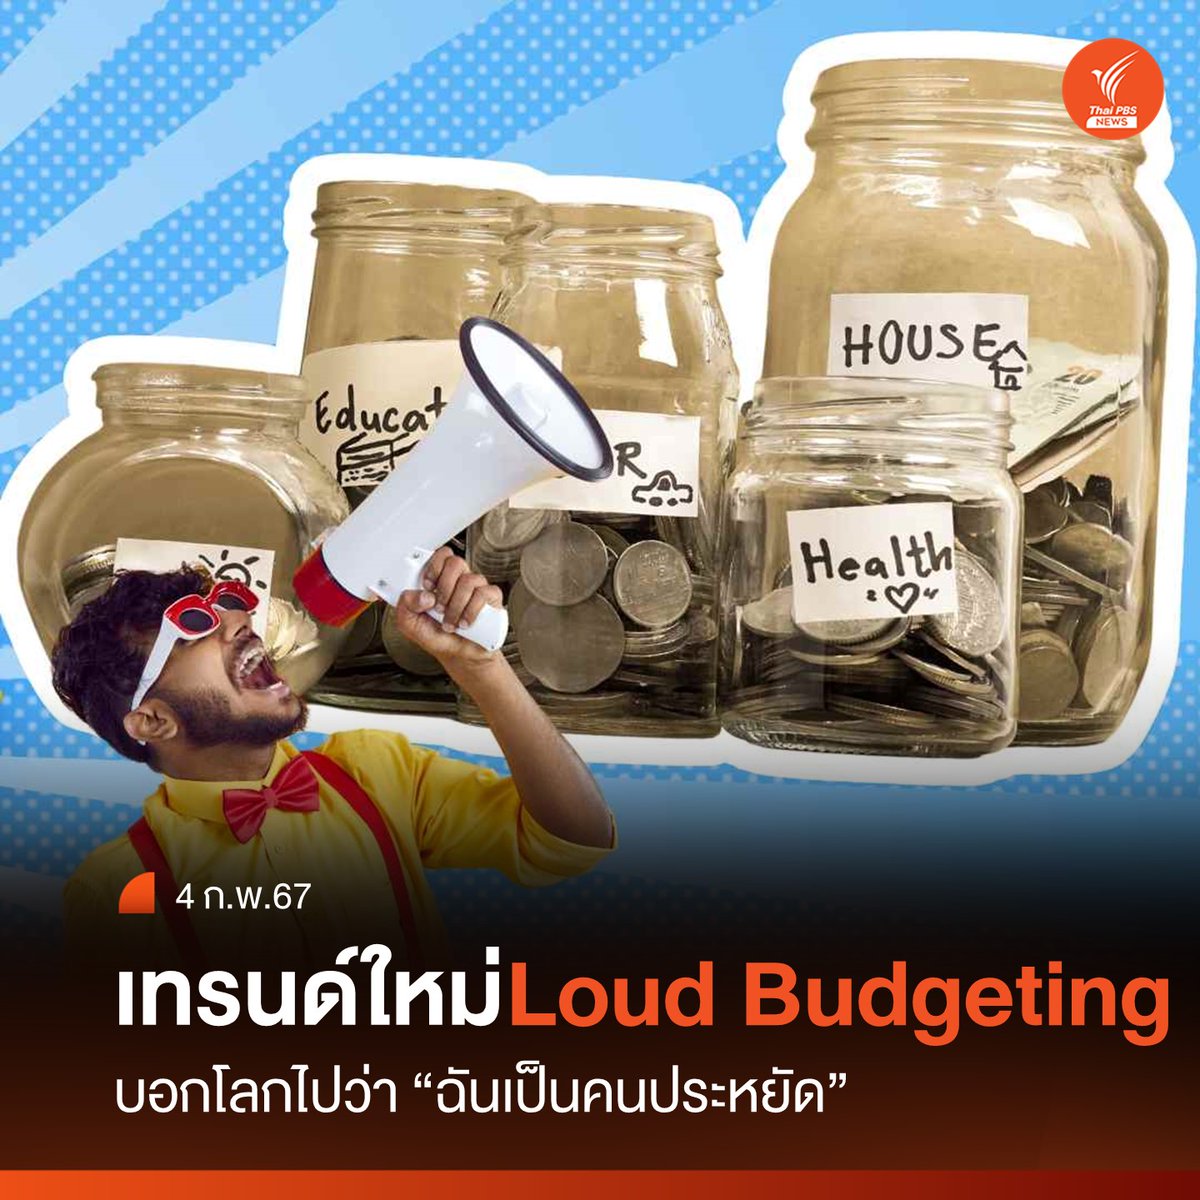 'Loud Budgeting' ตะโกนบอกโลกไปว่า 'ฉันเป็นคนประหยัด'

อ่านข่าวเพิ่ม : thaipbs.or.th/news/content/3…

#Loudbudgeting #เทรนด์ใหม่2024 #เทรนด์อวดความประหยัด #quietluxury #ความหรูหราแบบเงียบๆ #ของมันต้องมี #ข่าวไทยพีบีเอส #ข่าวที่คุณวางใจ #ThaiPBSnews